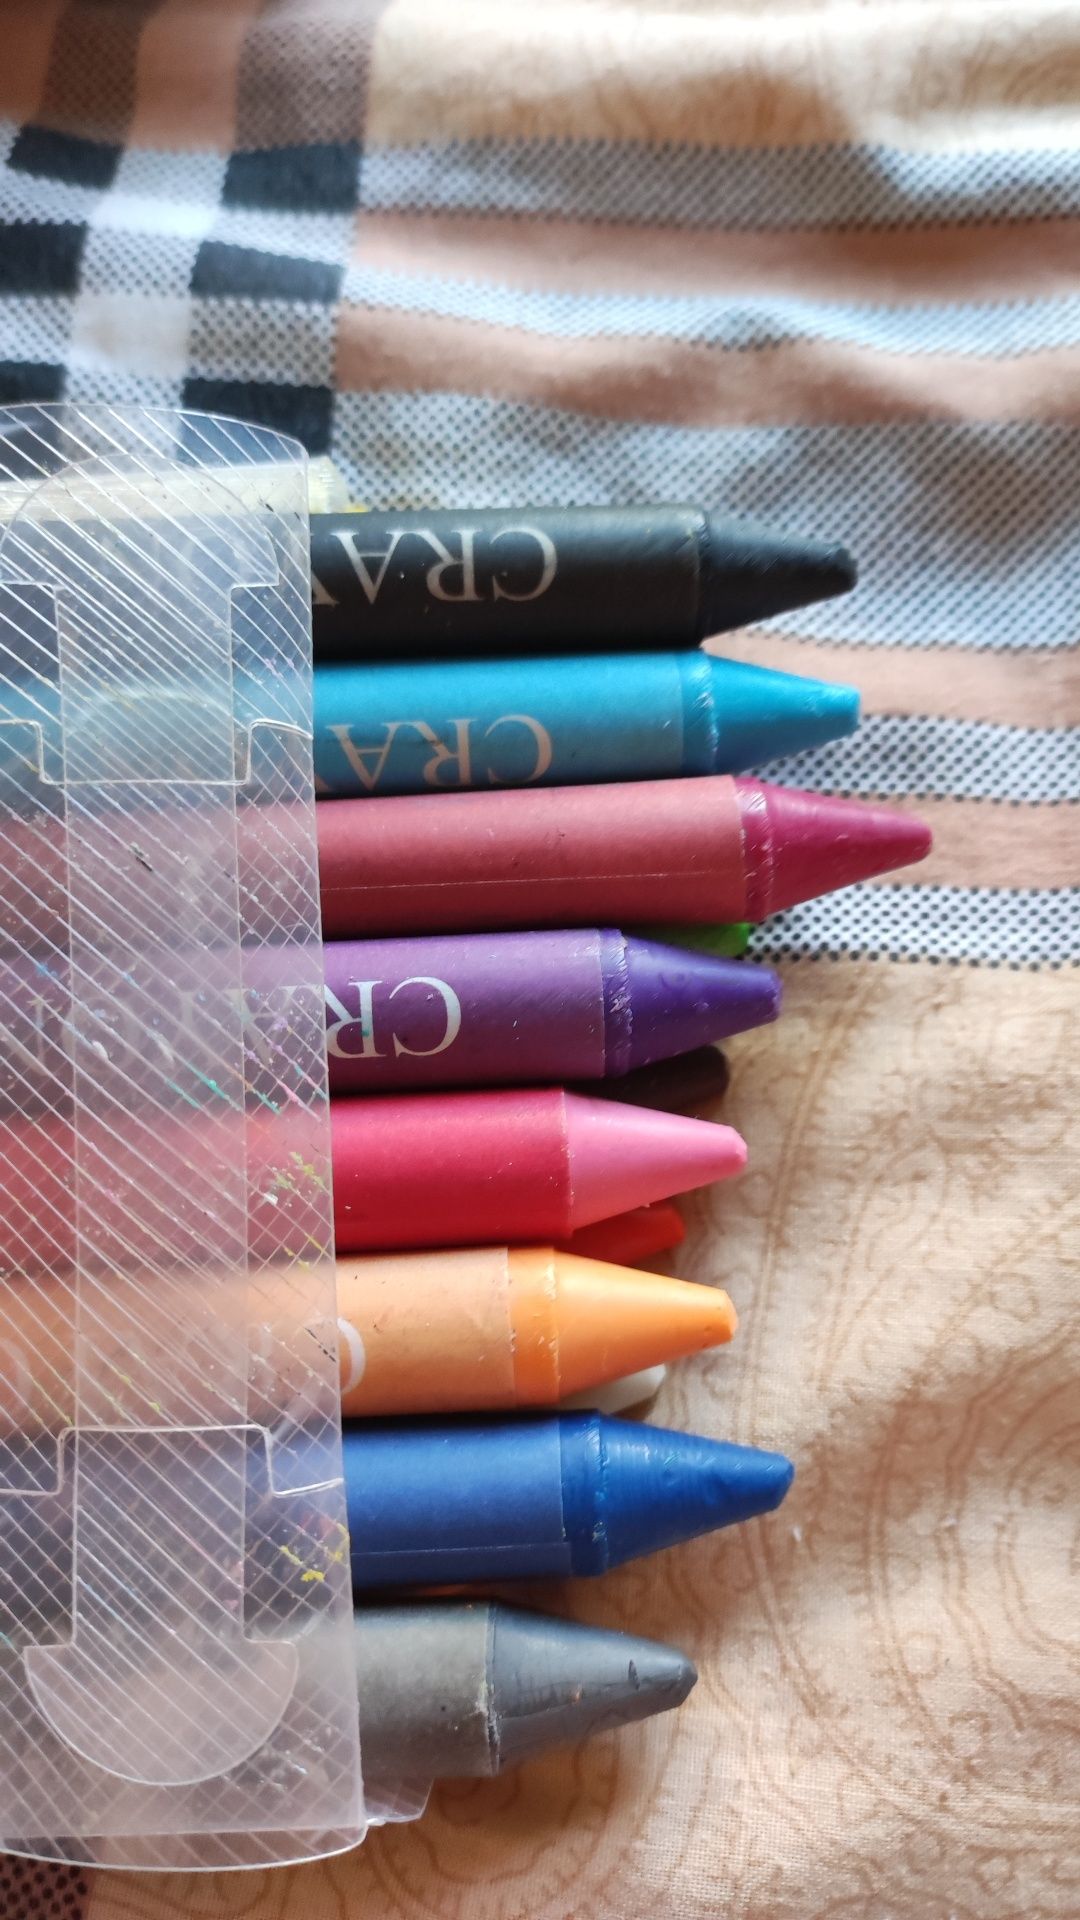 Crayons max 16 шт олівці